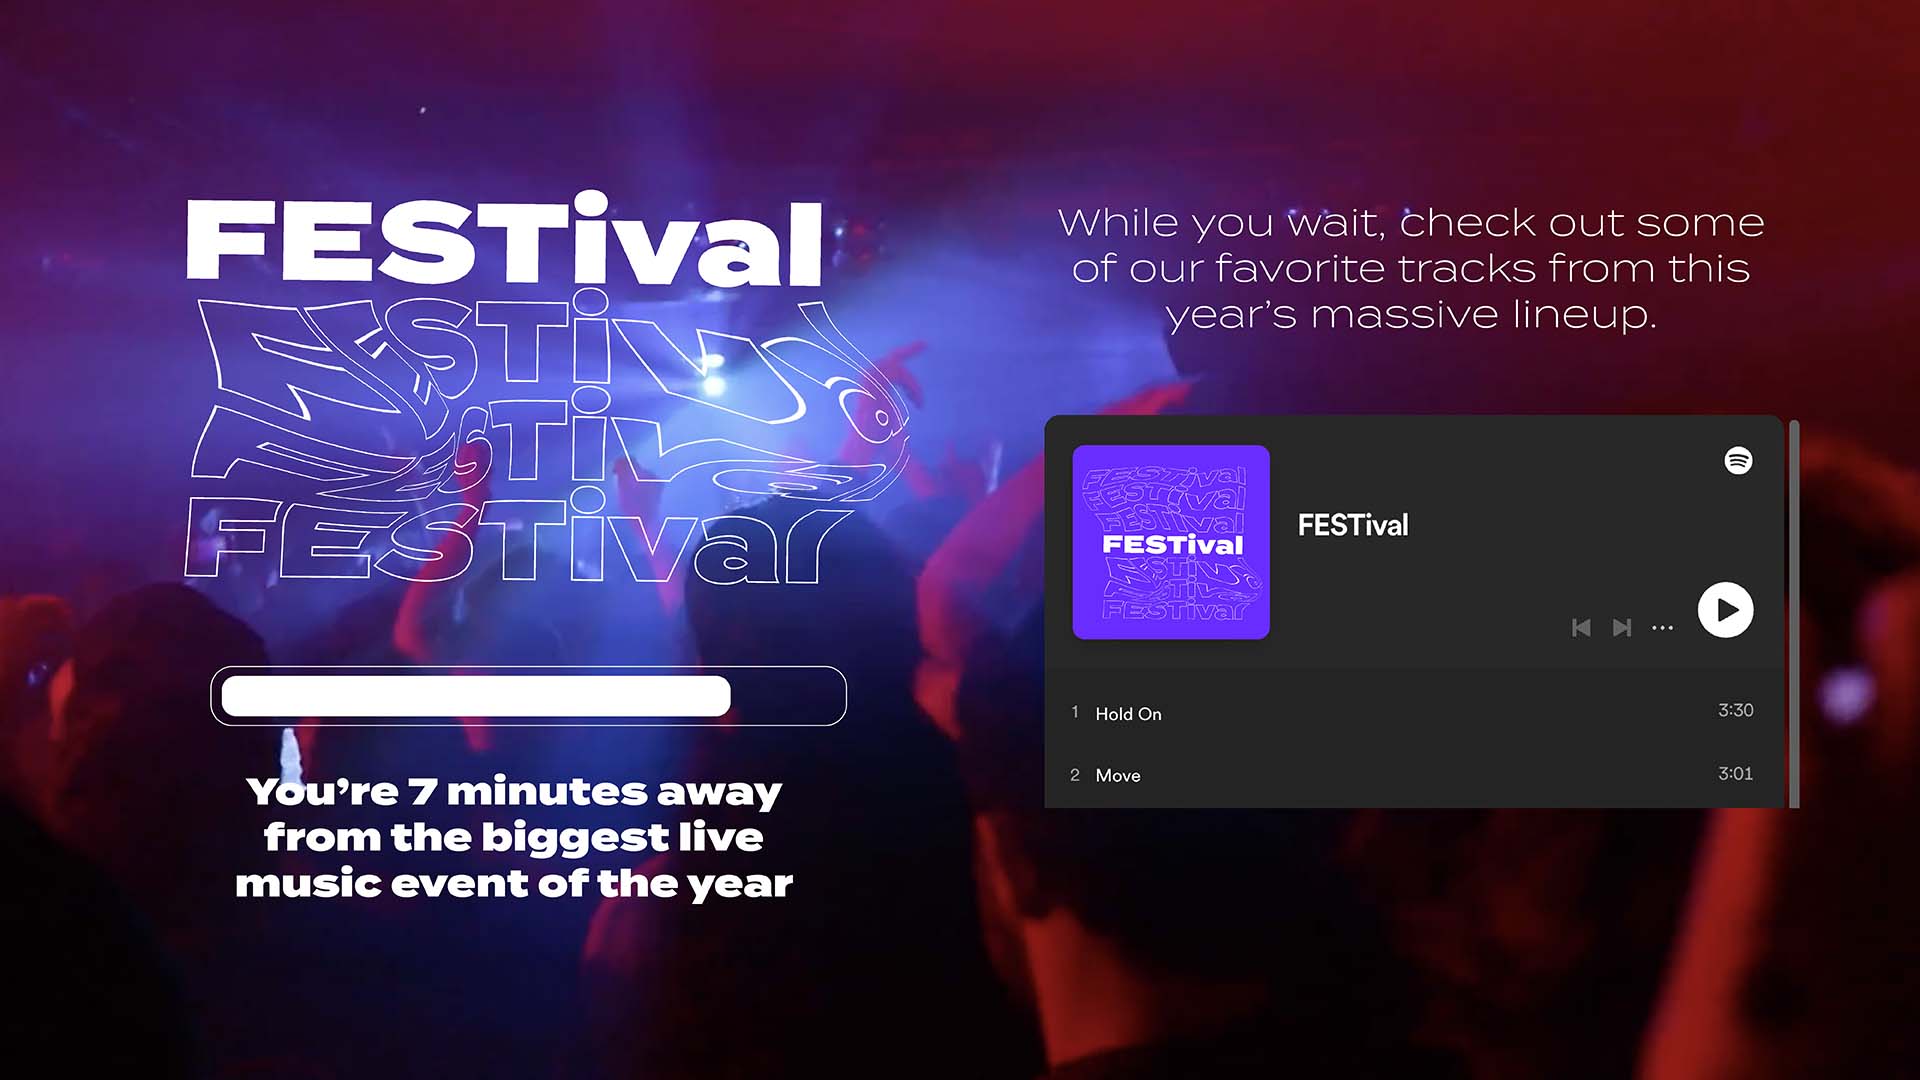 Festival virtual waiting room page